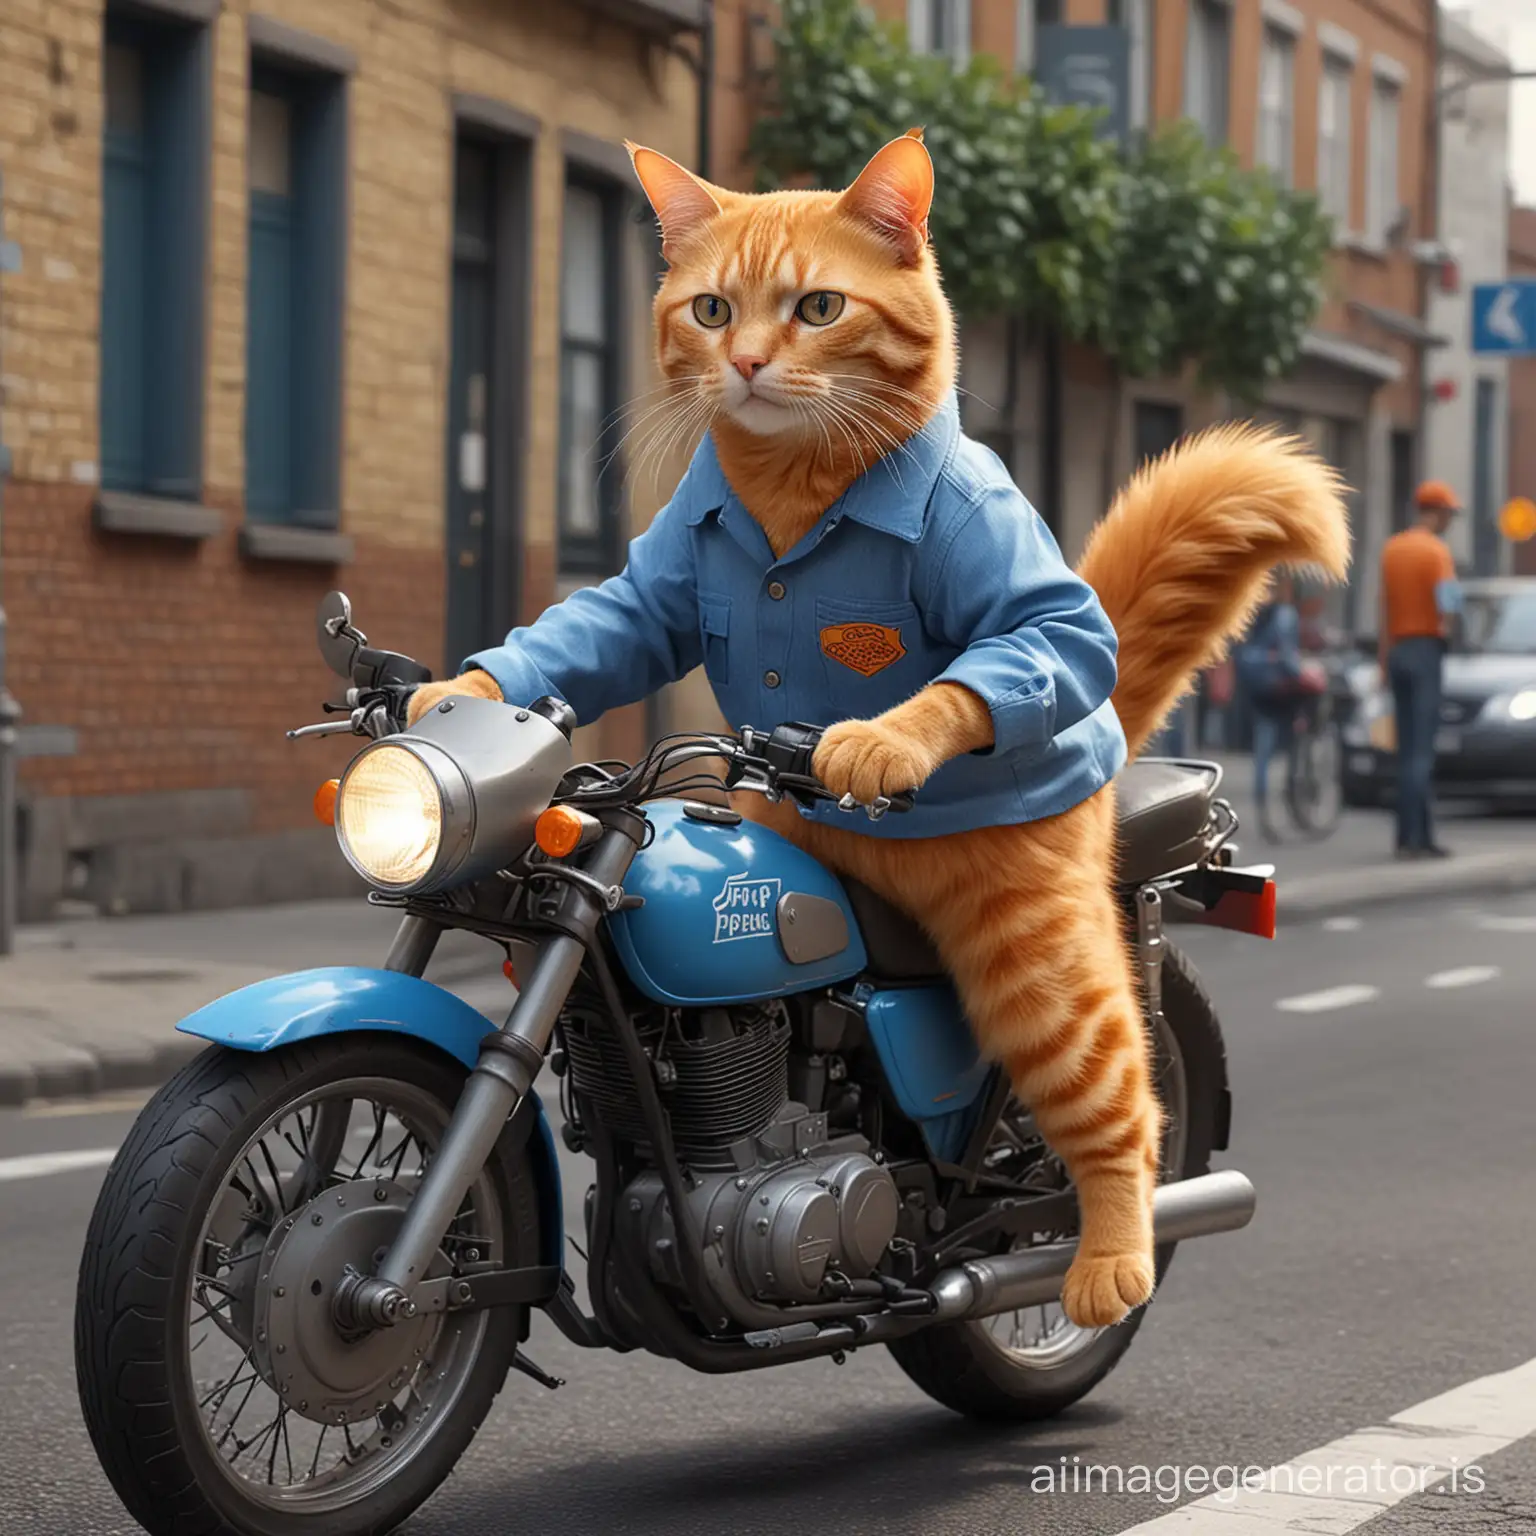 Orange-Cat-in-Pizza-Worker-Shirt-Riding-Blue-Motorbike-on-Urban-Street